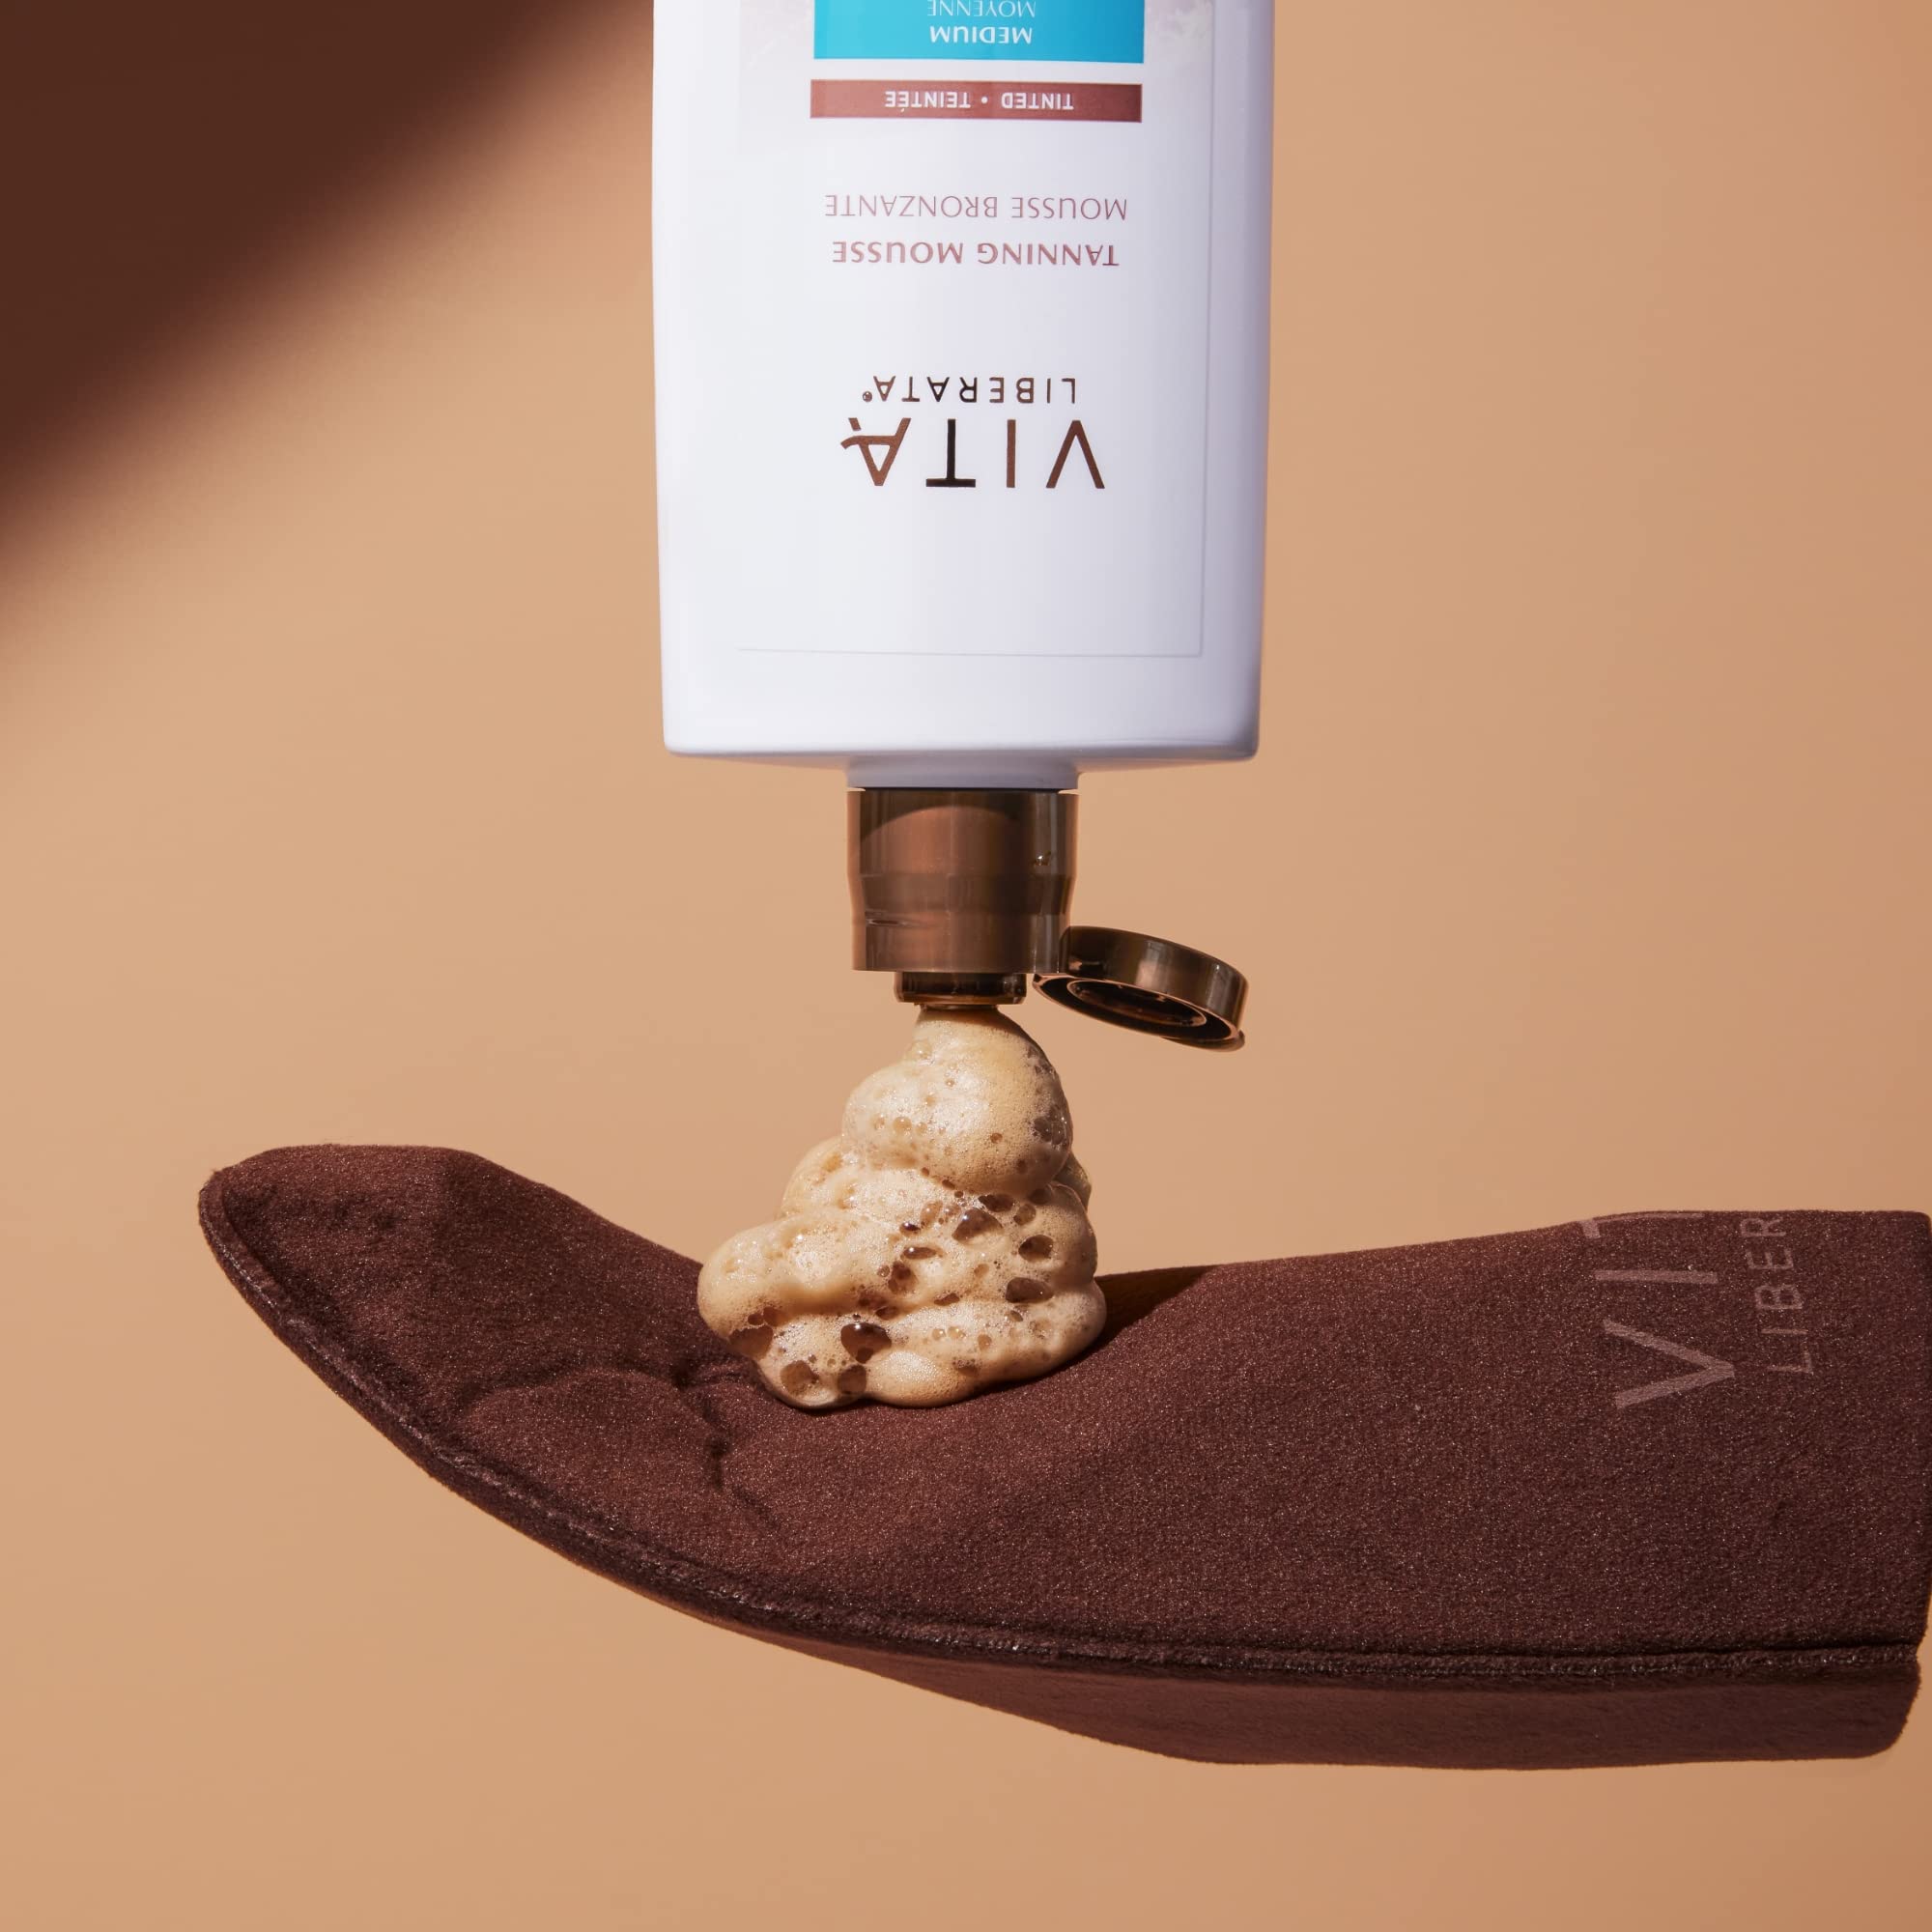 Vita Liberata Dual Sided Luxury Velvet Tanning Mitt | NEW